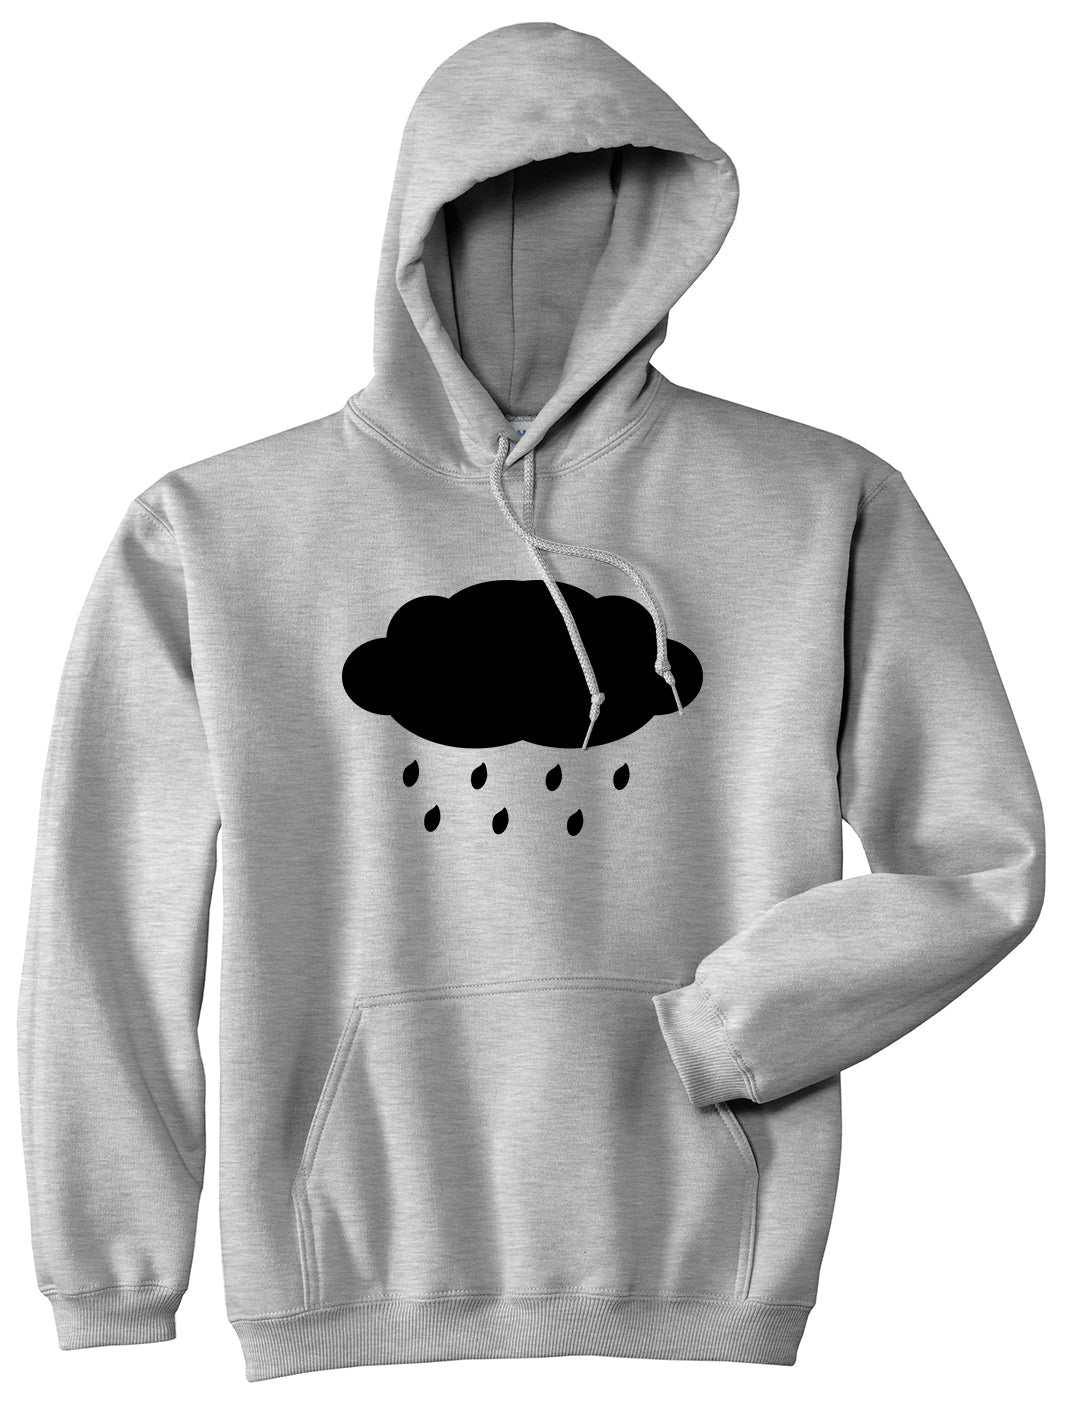 Rain Cloud Grey Pullover Hoodie by Kings Of NY